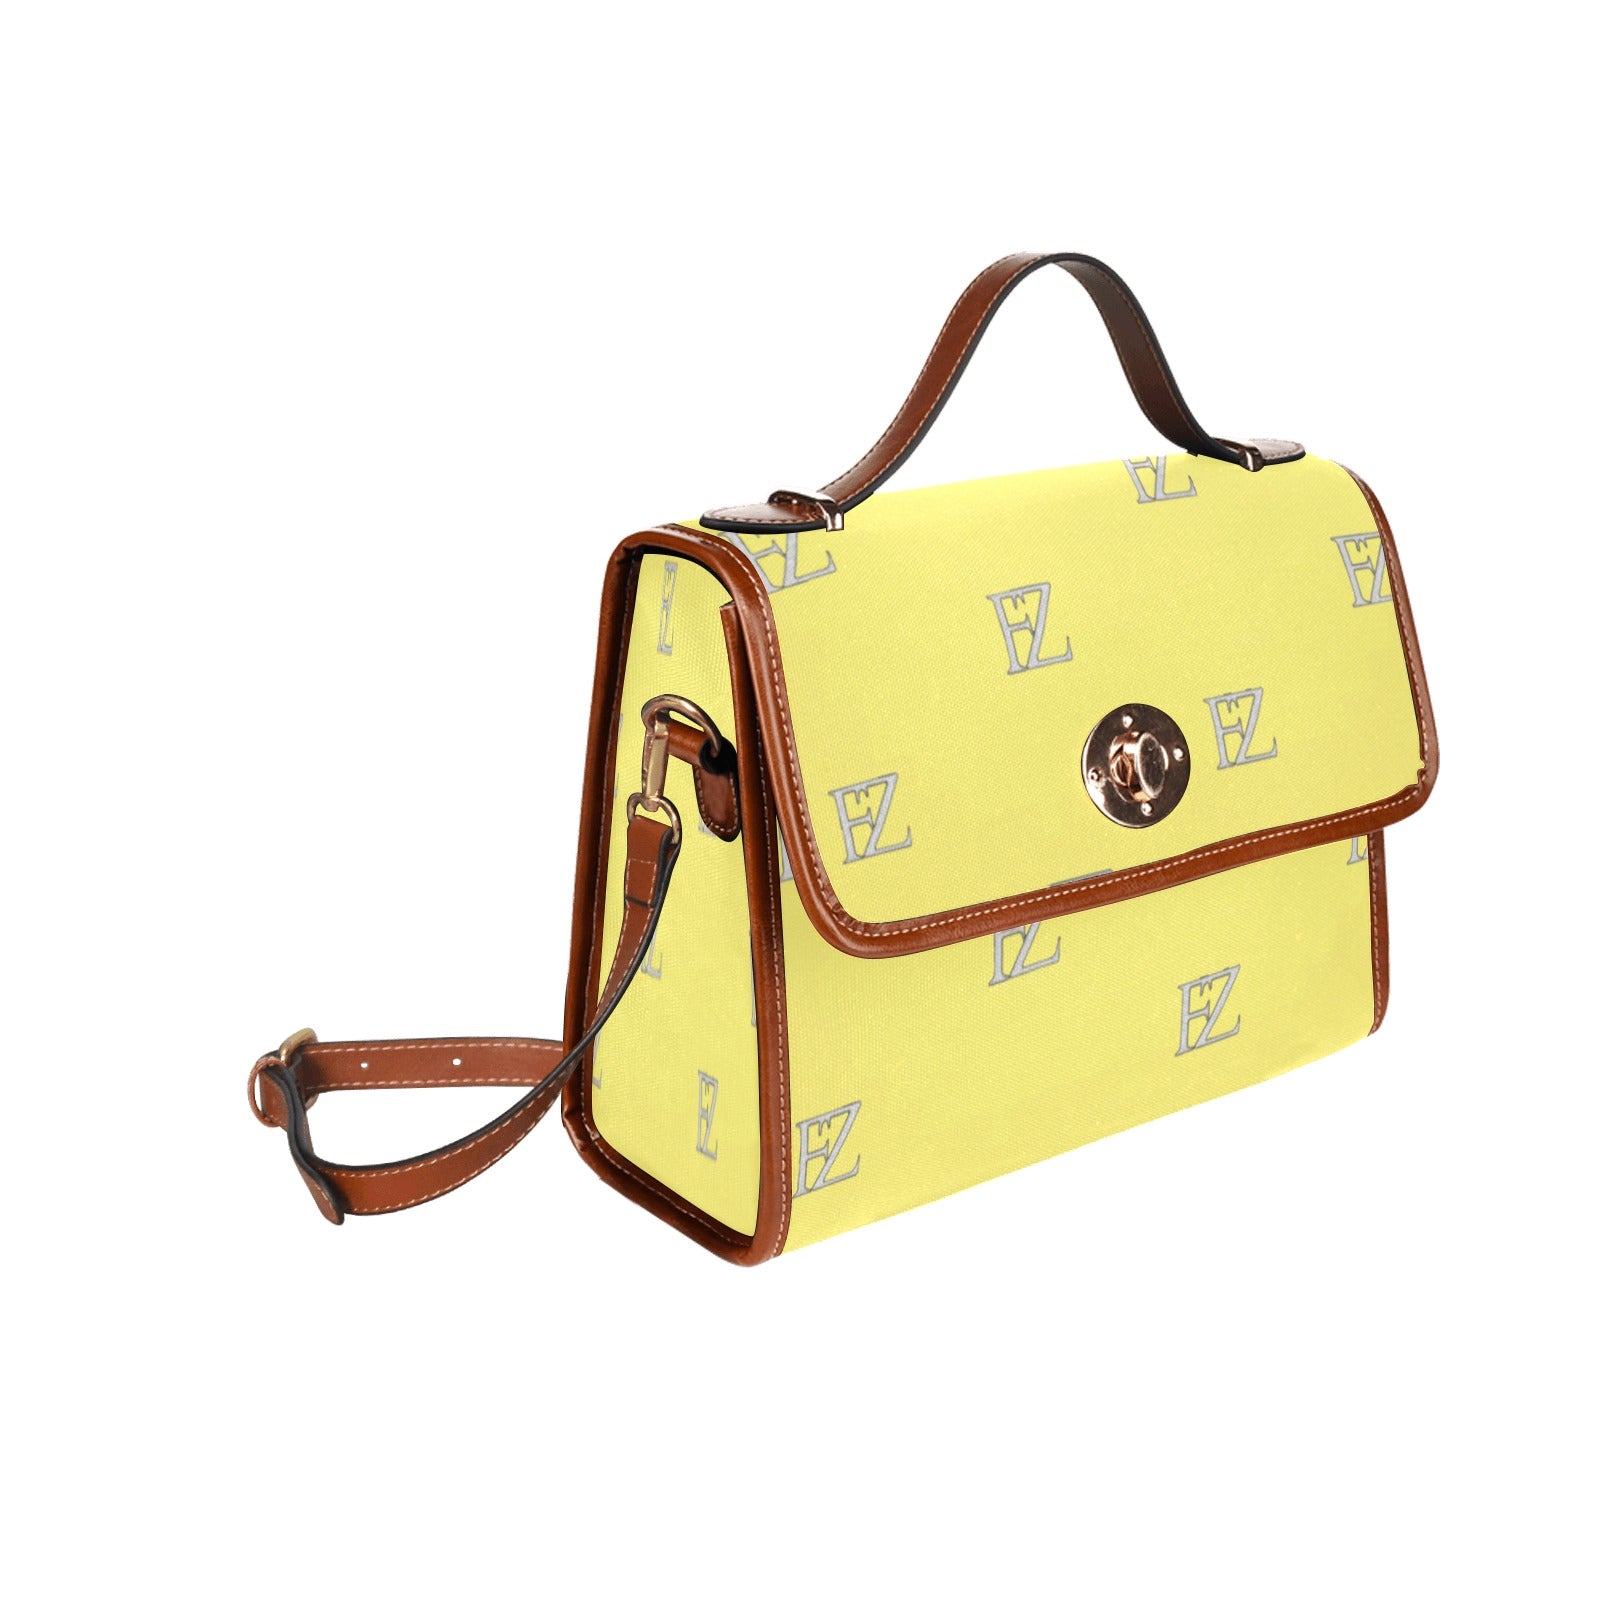 fz yellow handbag all over print waterproof canvas bag(model1641)(brown strap)